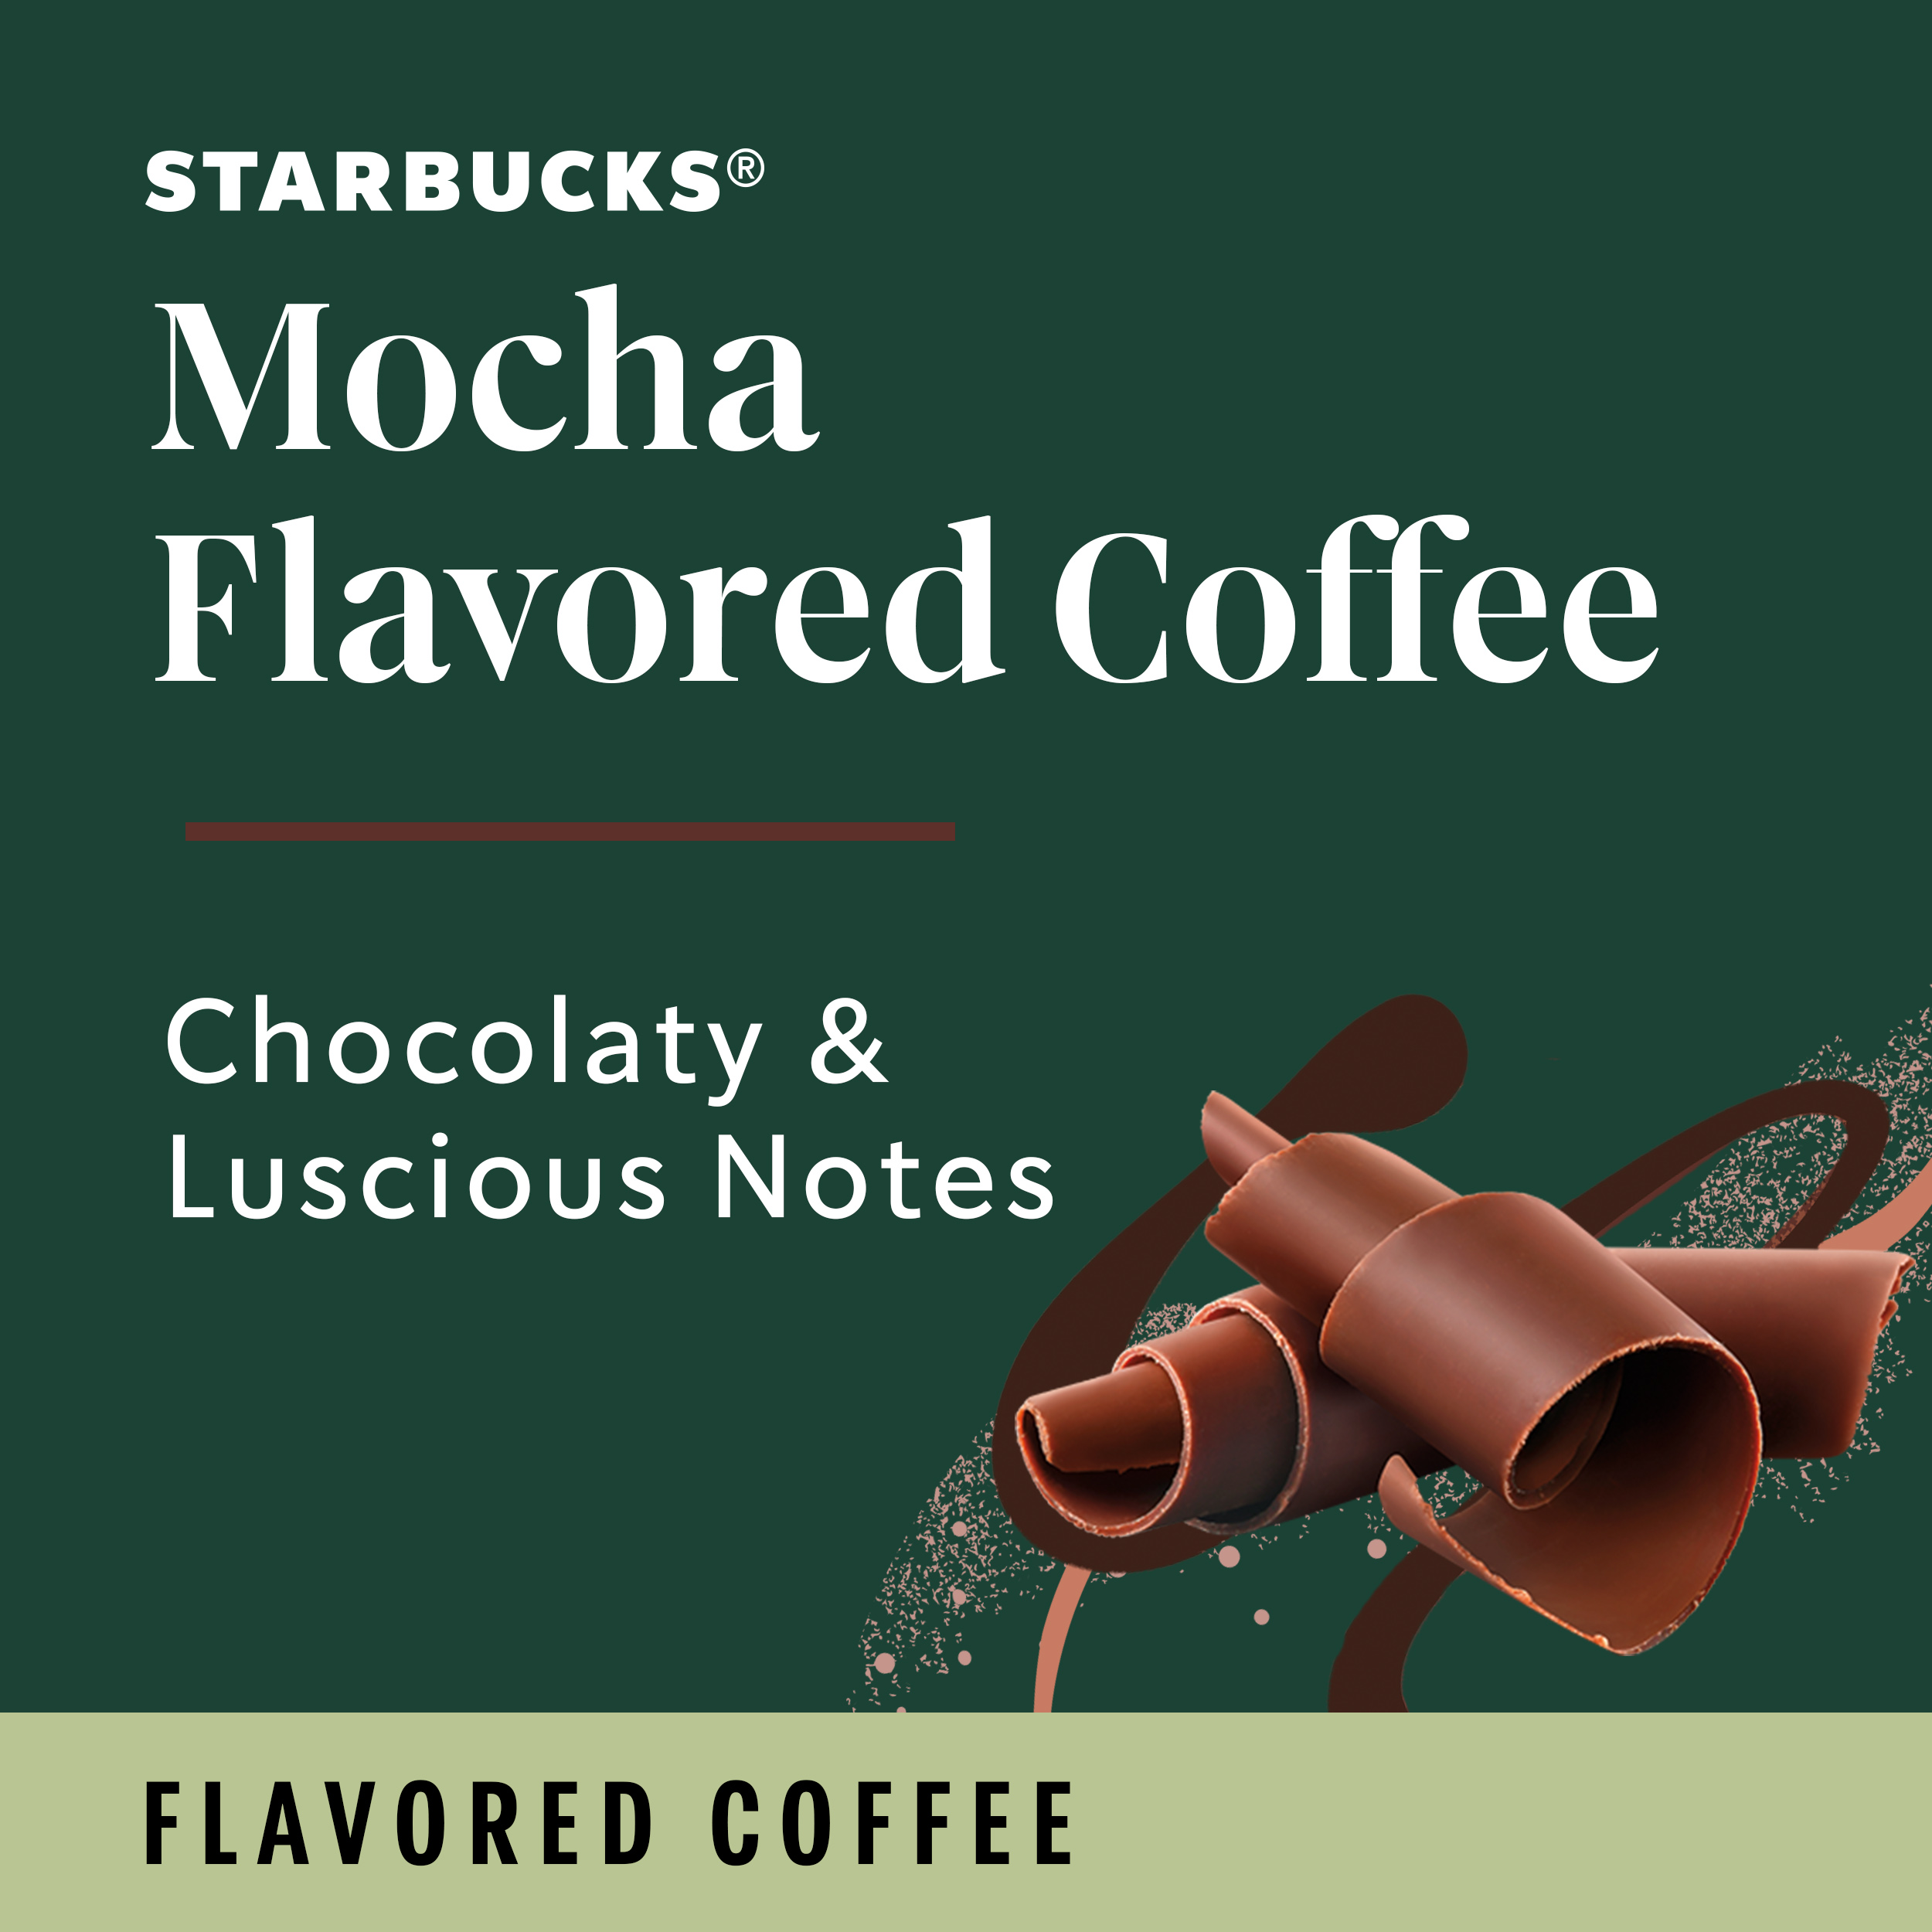 Starbucks Arabica Beans Mocha, Naturally Flavored, Ground Coffee, 11 oz - image 3 of 8